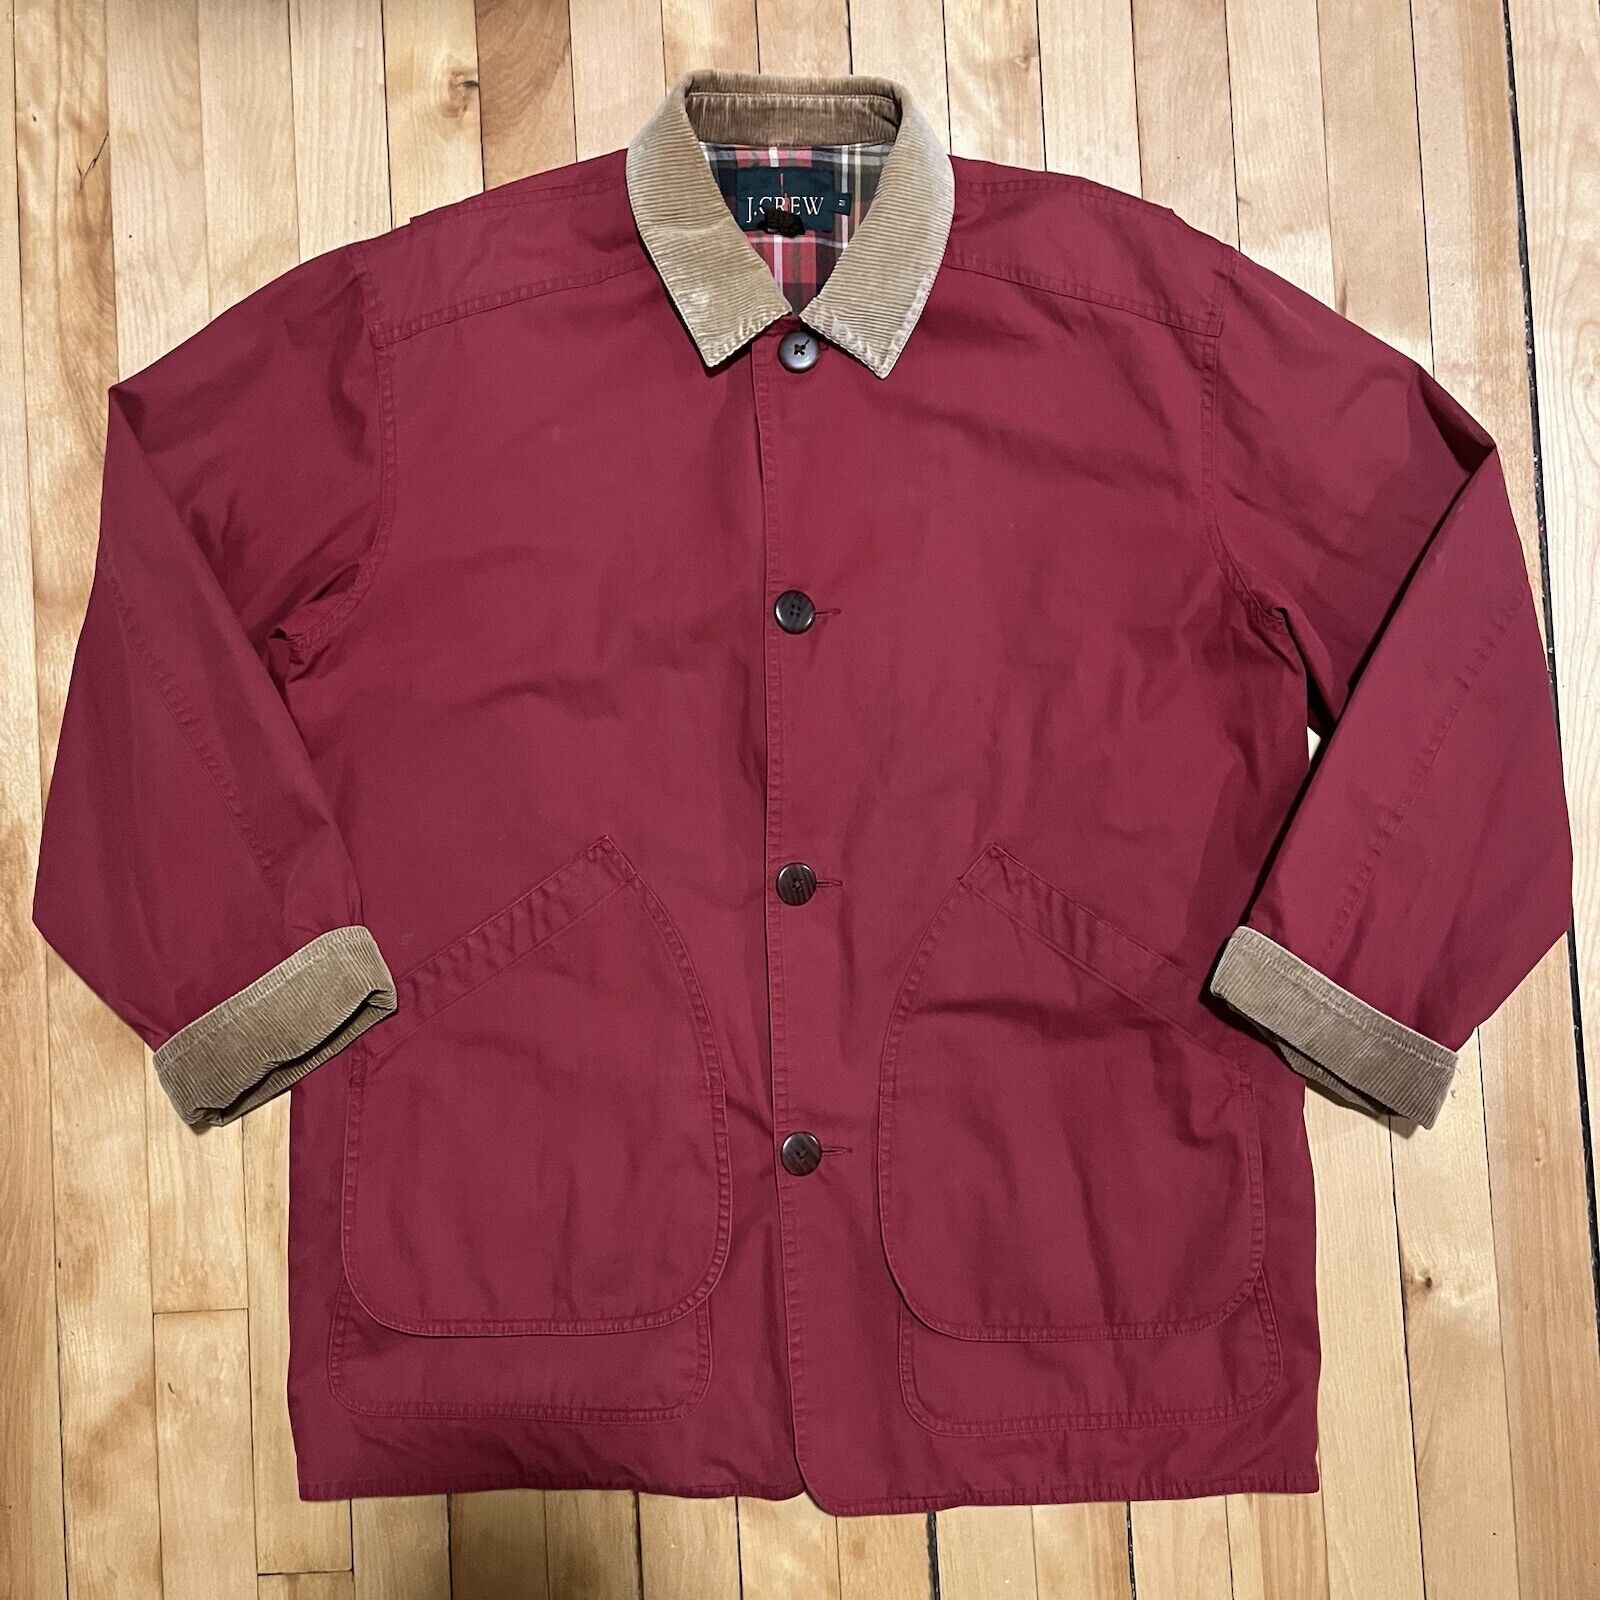 Rare J CREW Barn Jacket Chore Coat 90s Vintage RED Plaid Flannel Lined Men\'s Med